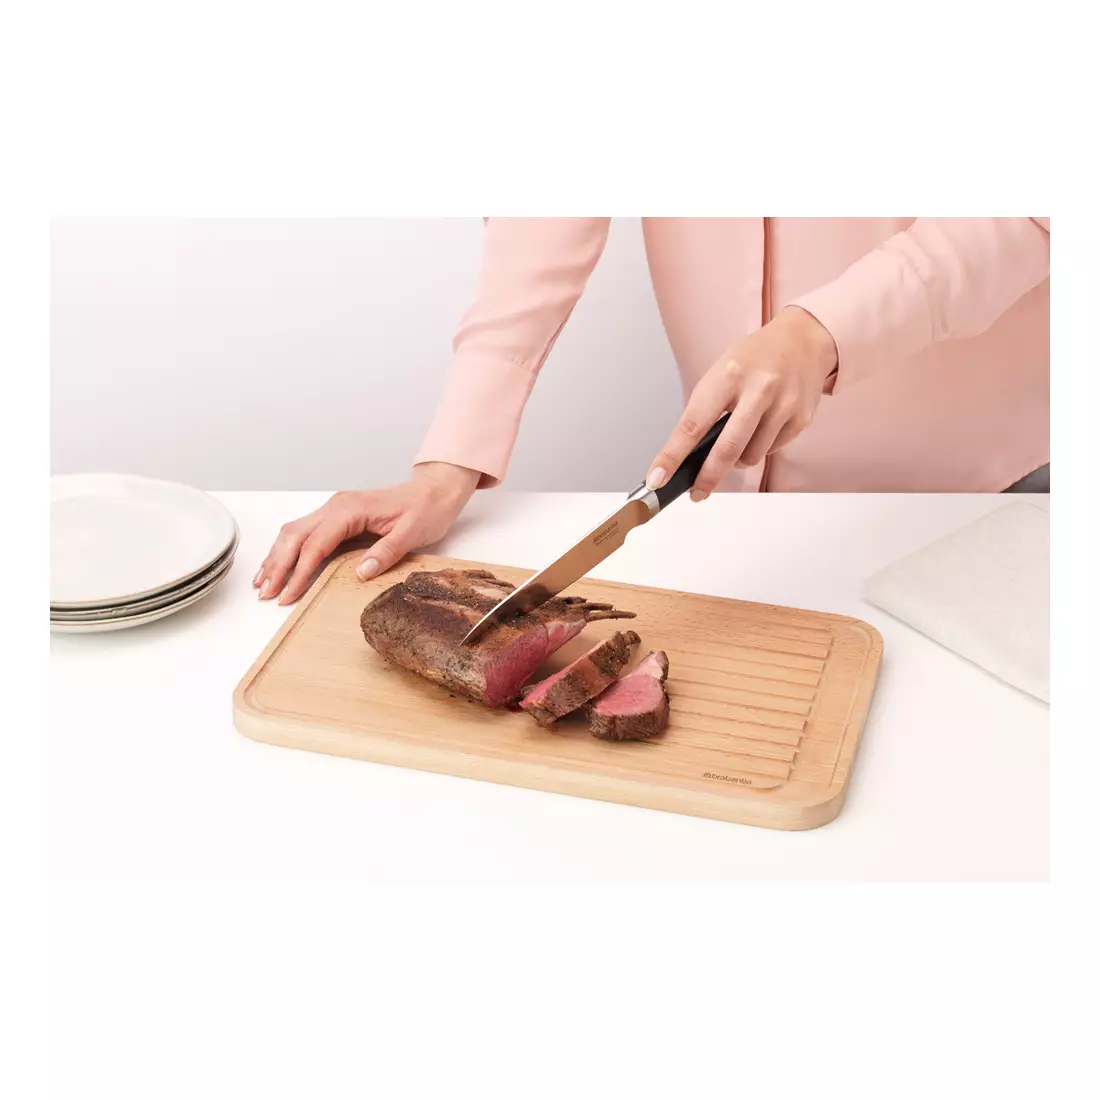 BRABANTIA Profile meat cutting board, wooden